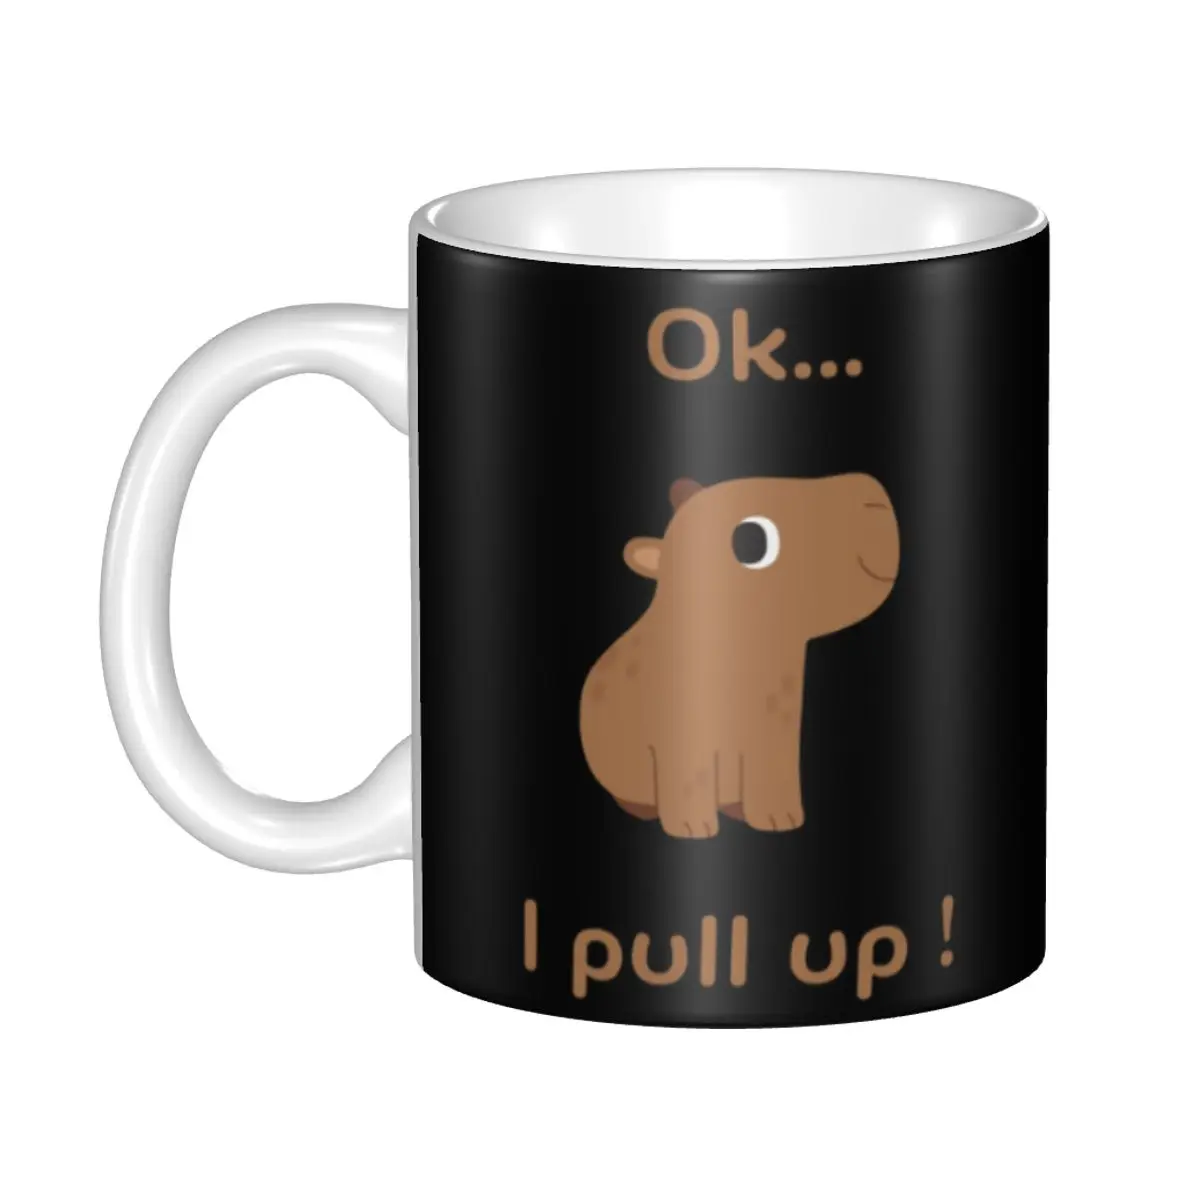 

Ok Saya Pull Up Capybara Coffee Mugs DIY Personalized Ceramic Mug Creative Gift